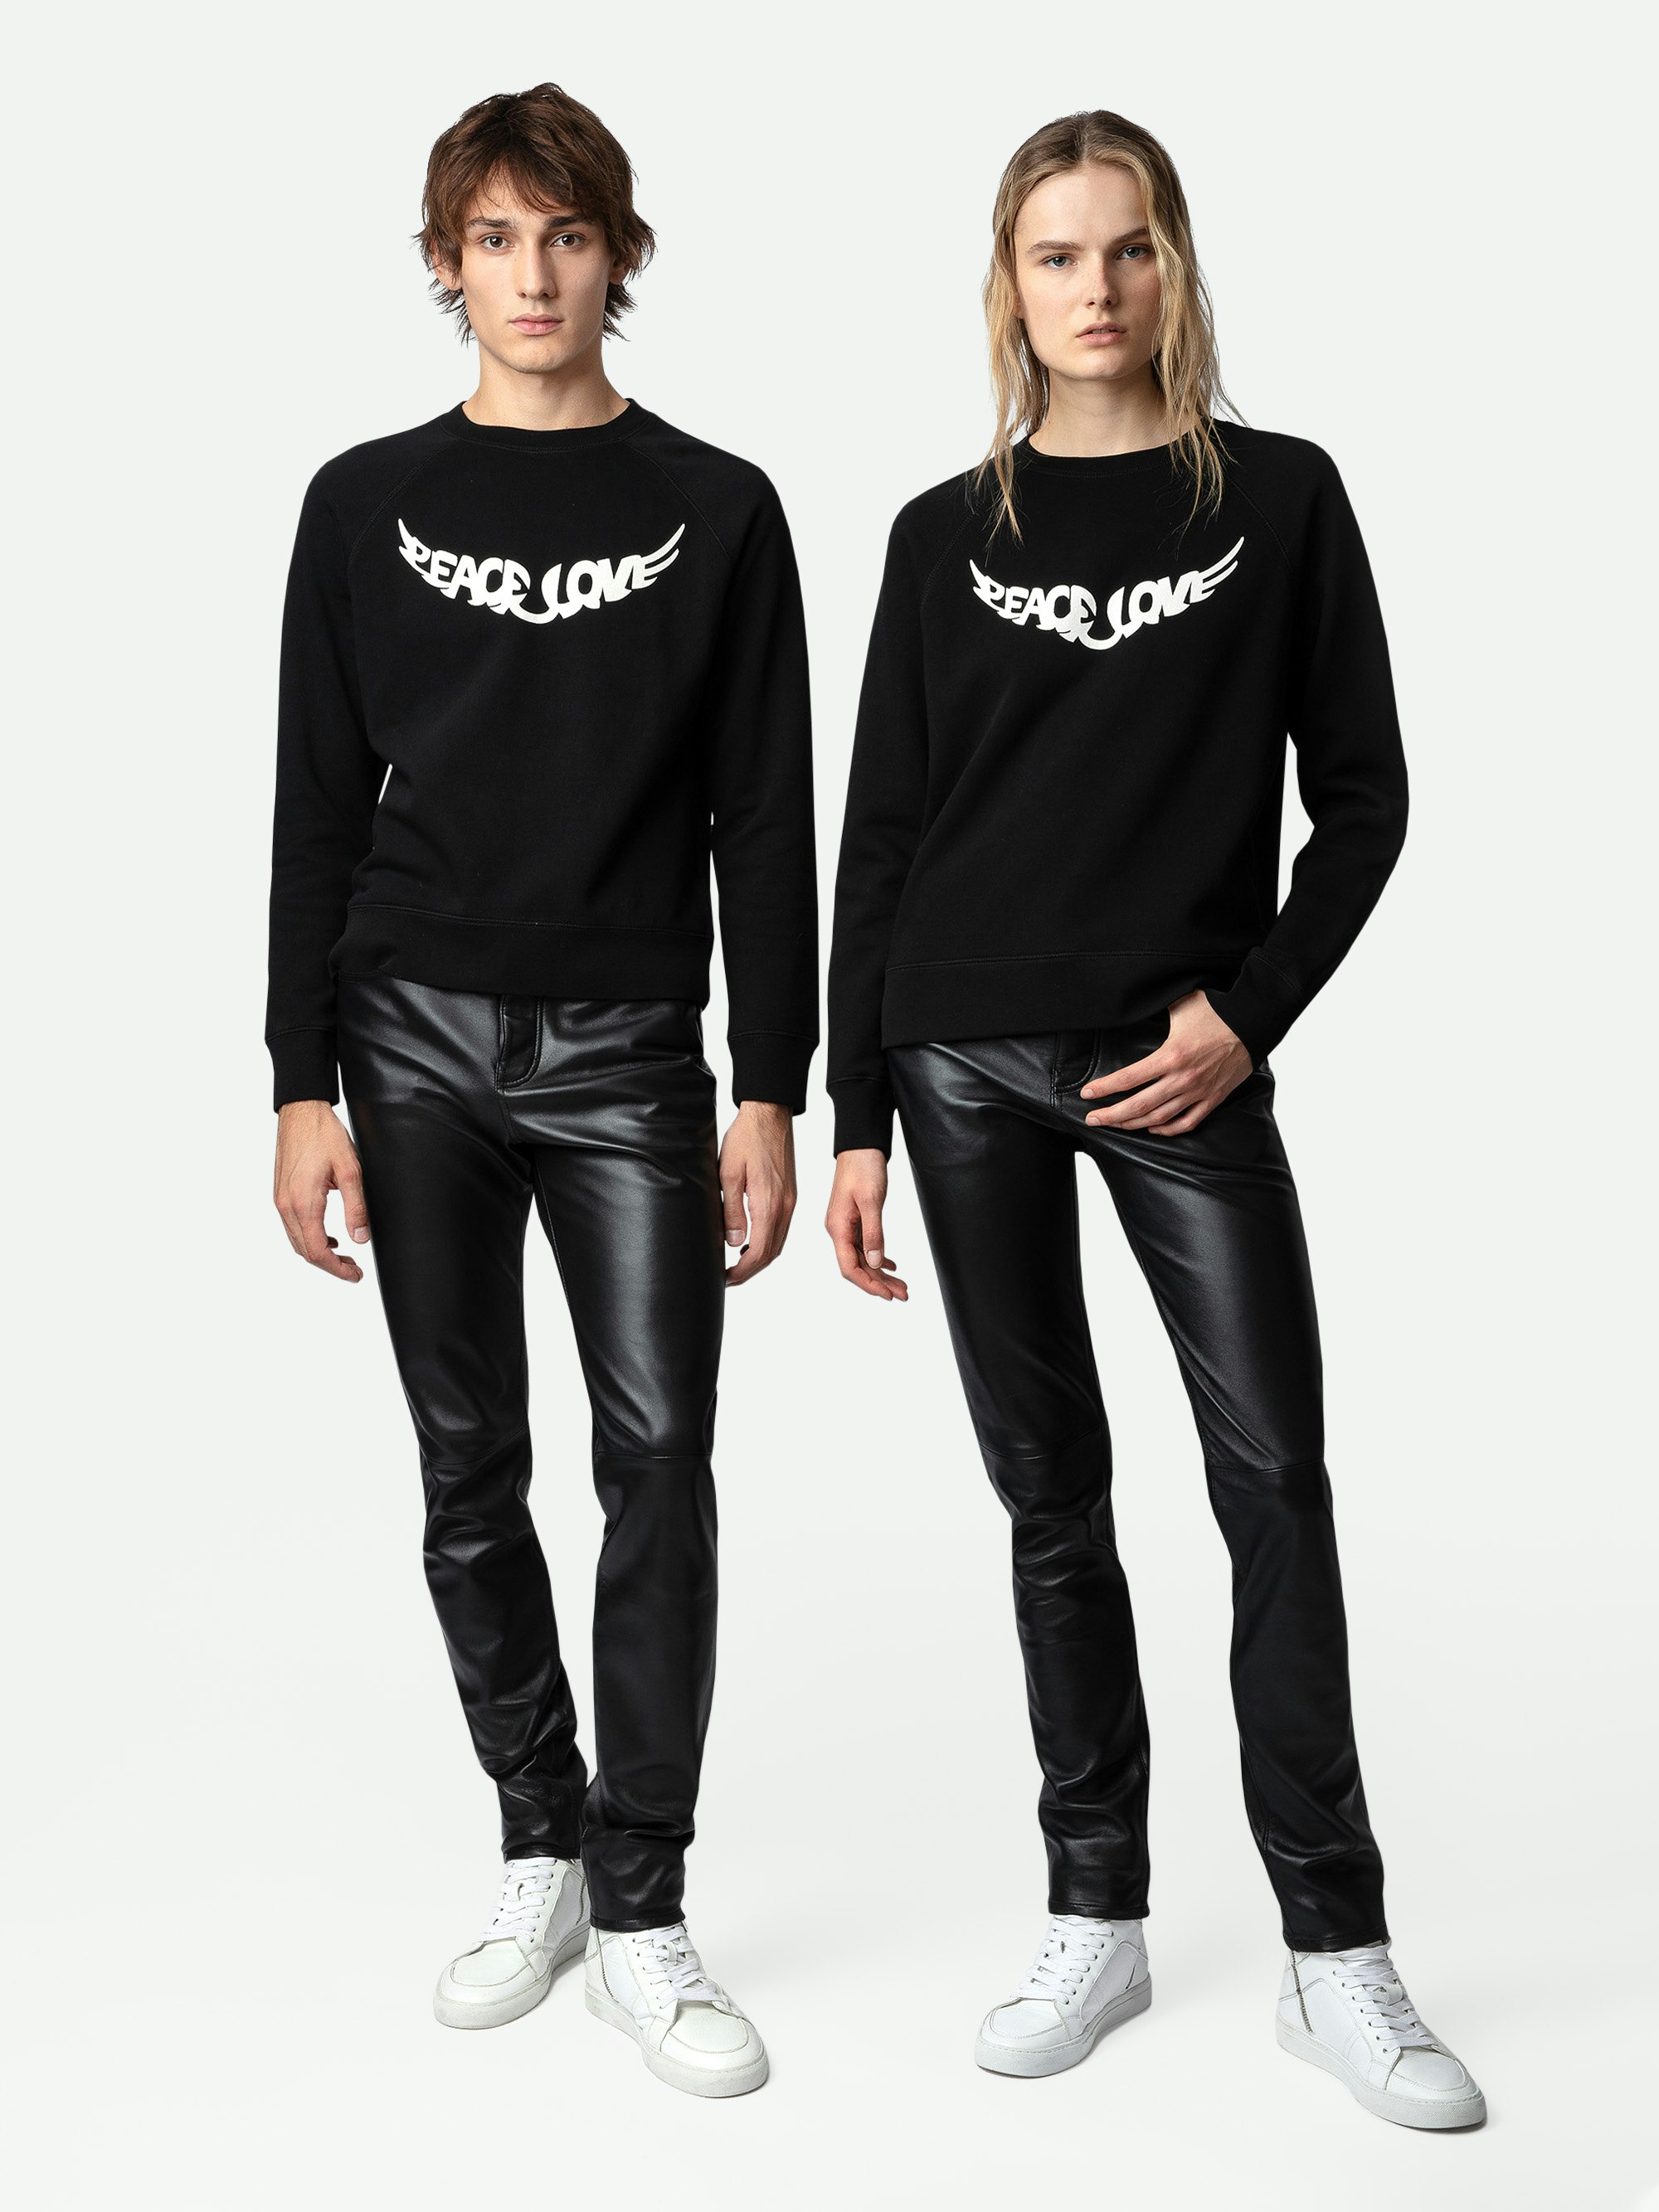 Upper Peace & Love Sweatshirt - Unisex’s black cotton sweatshirt with the wing-shaped “Peace & Love” slogan.